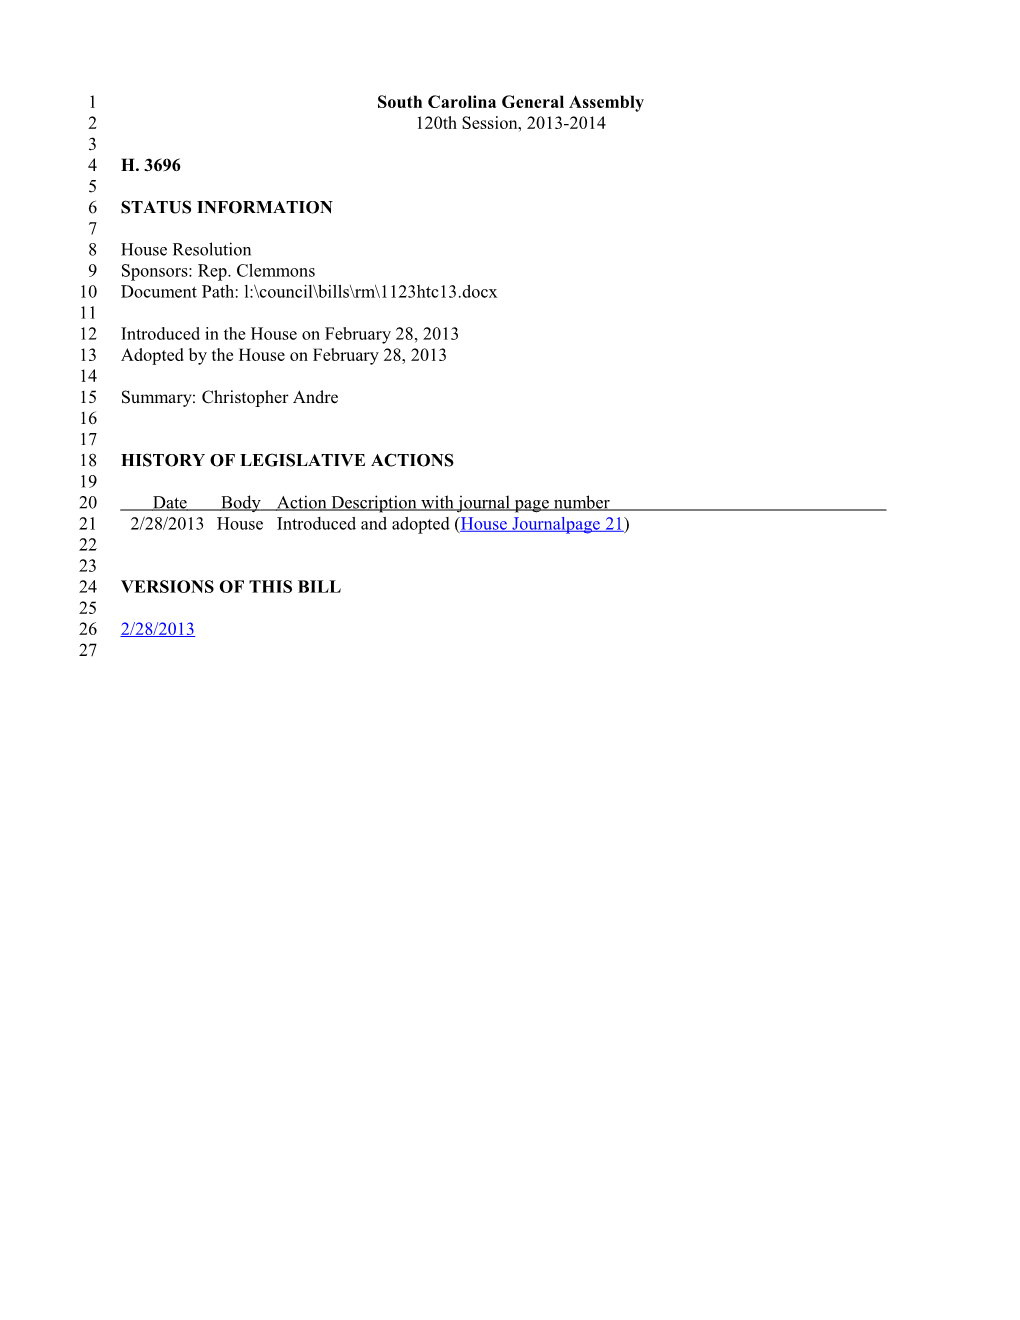 2013-2014 Bill 3696: Christopher Andre - South Carolina Legislature Online